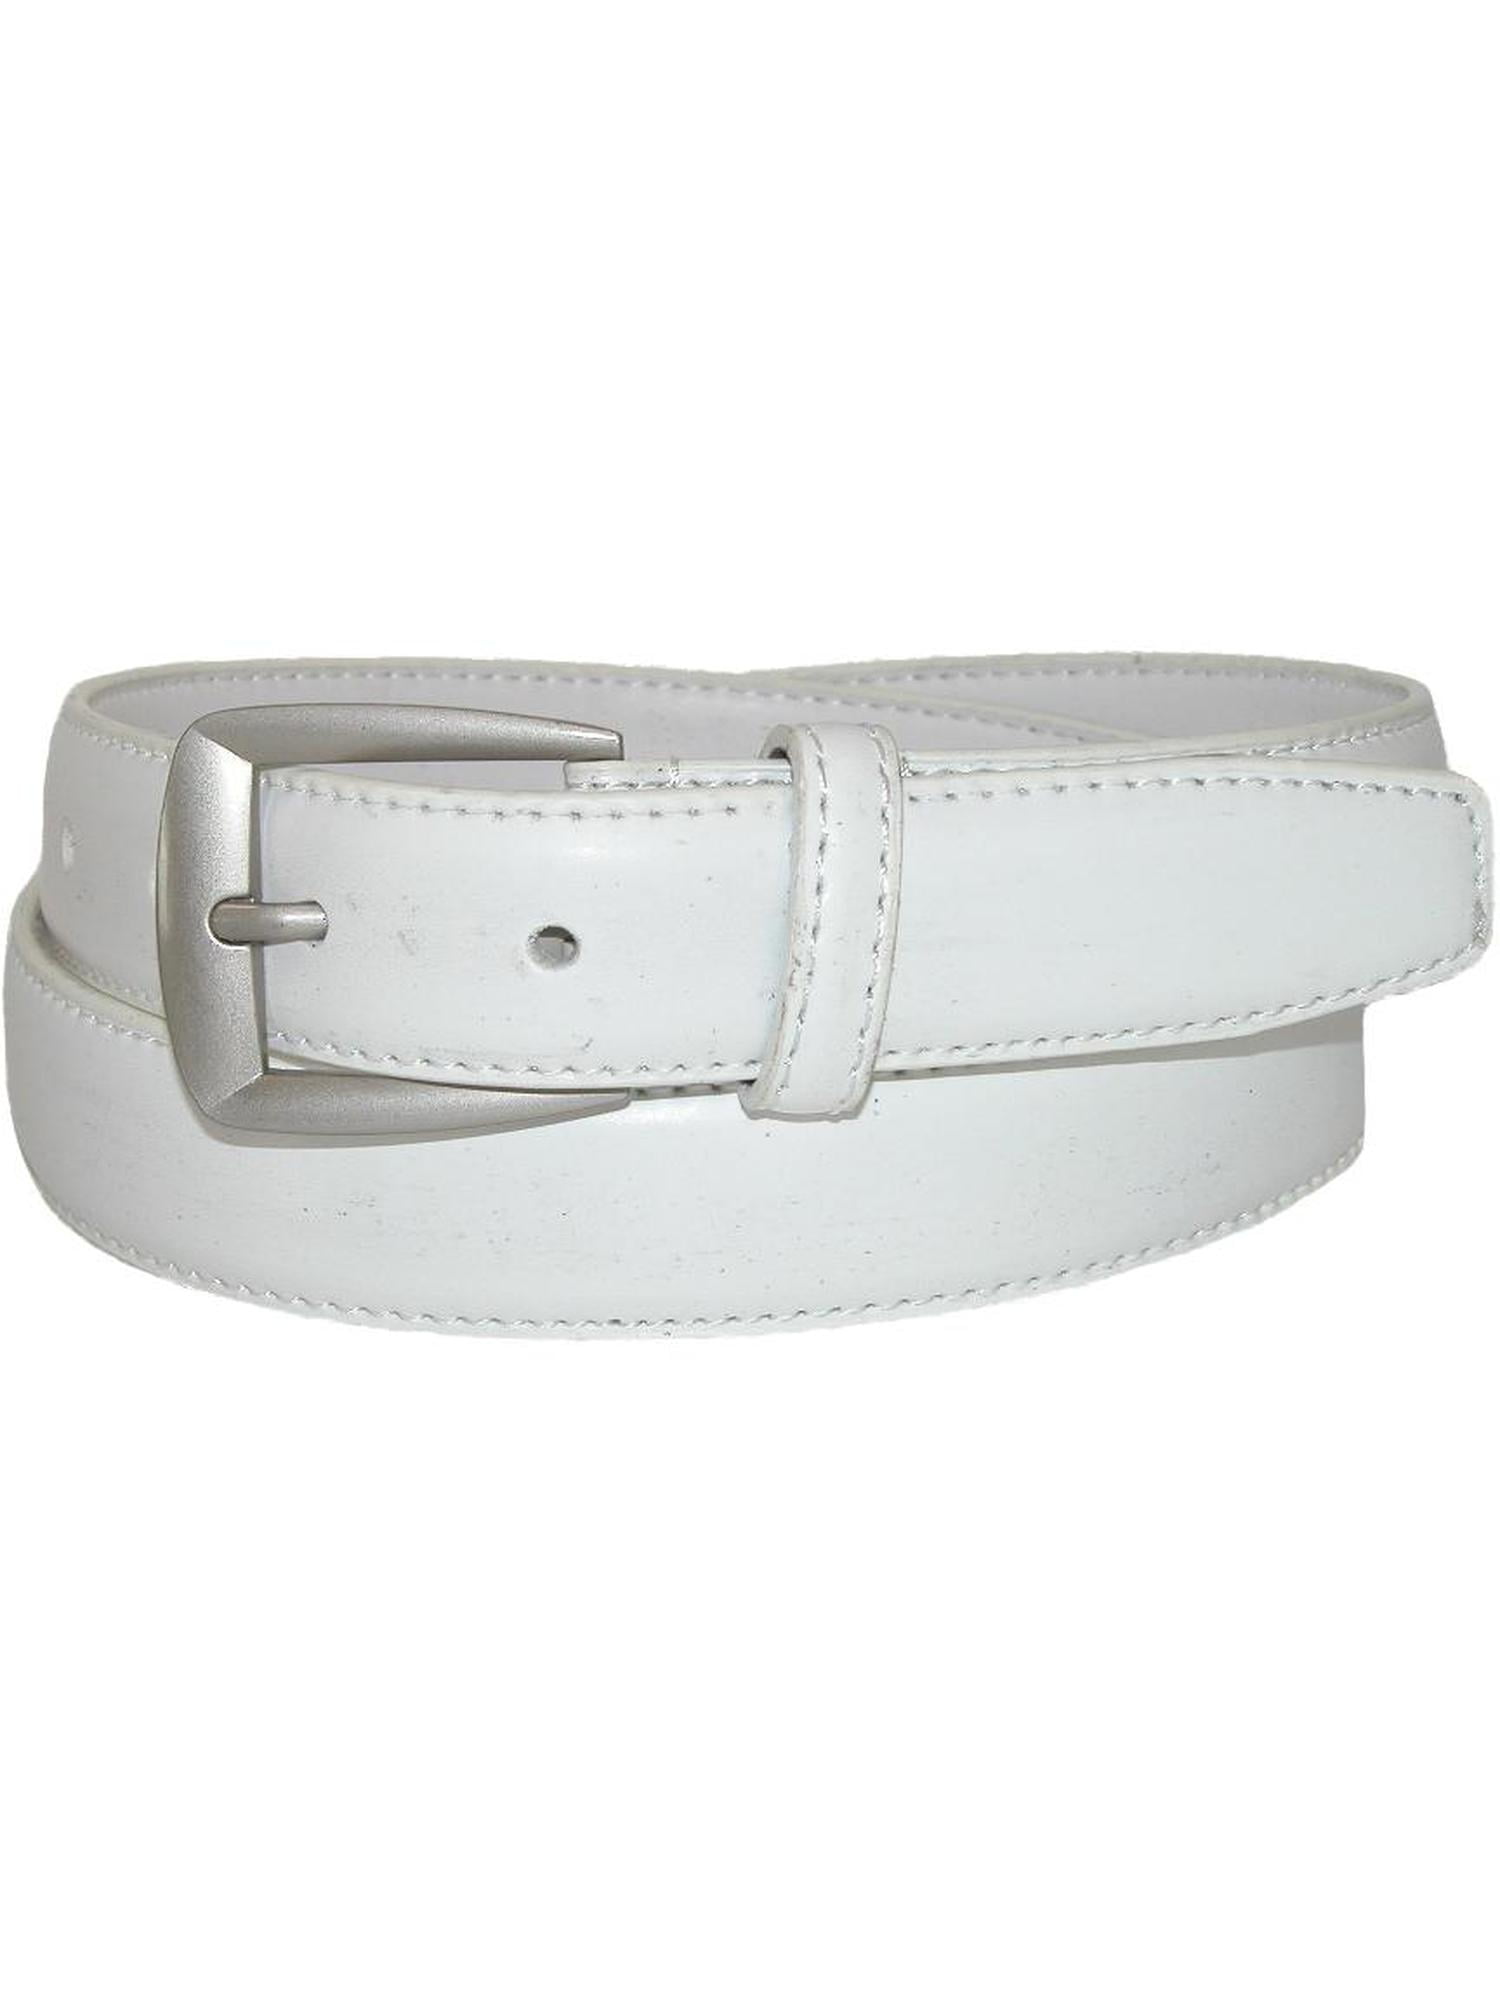 CTM Basic Leather Dress Belt (Men) - Walmart.com